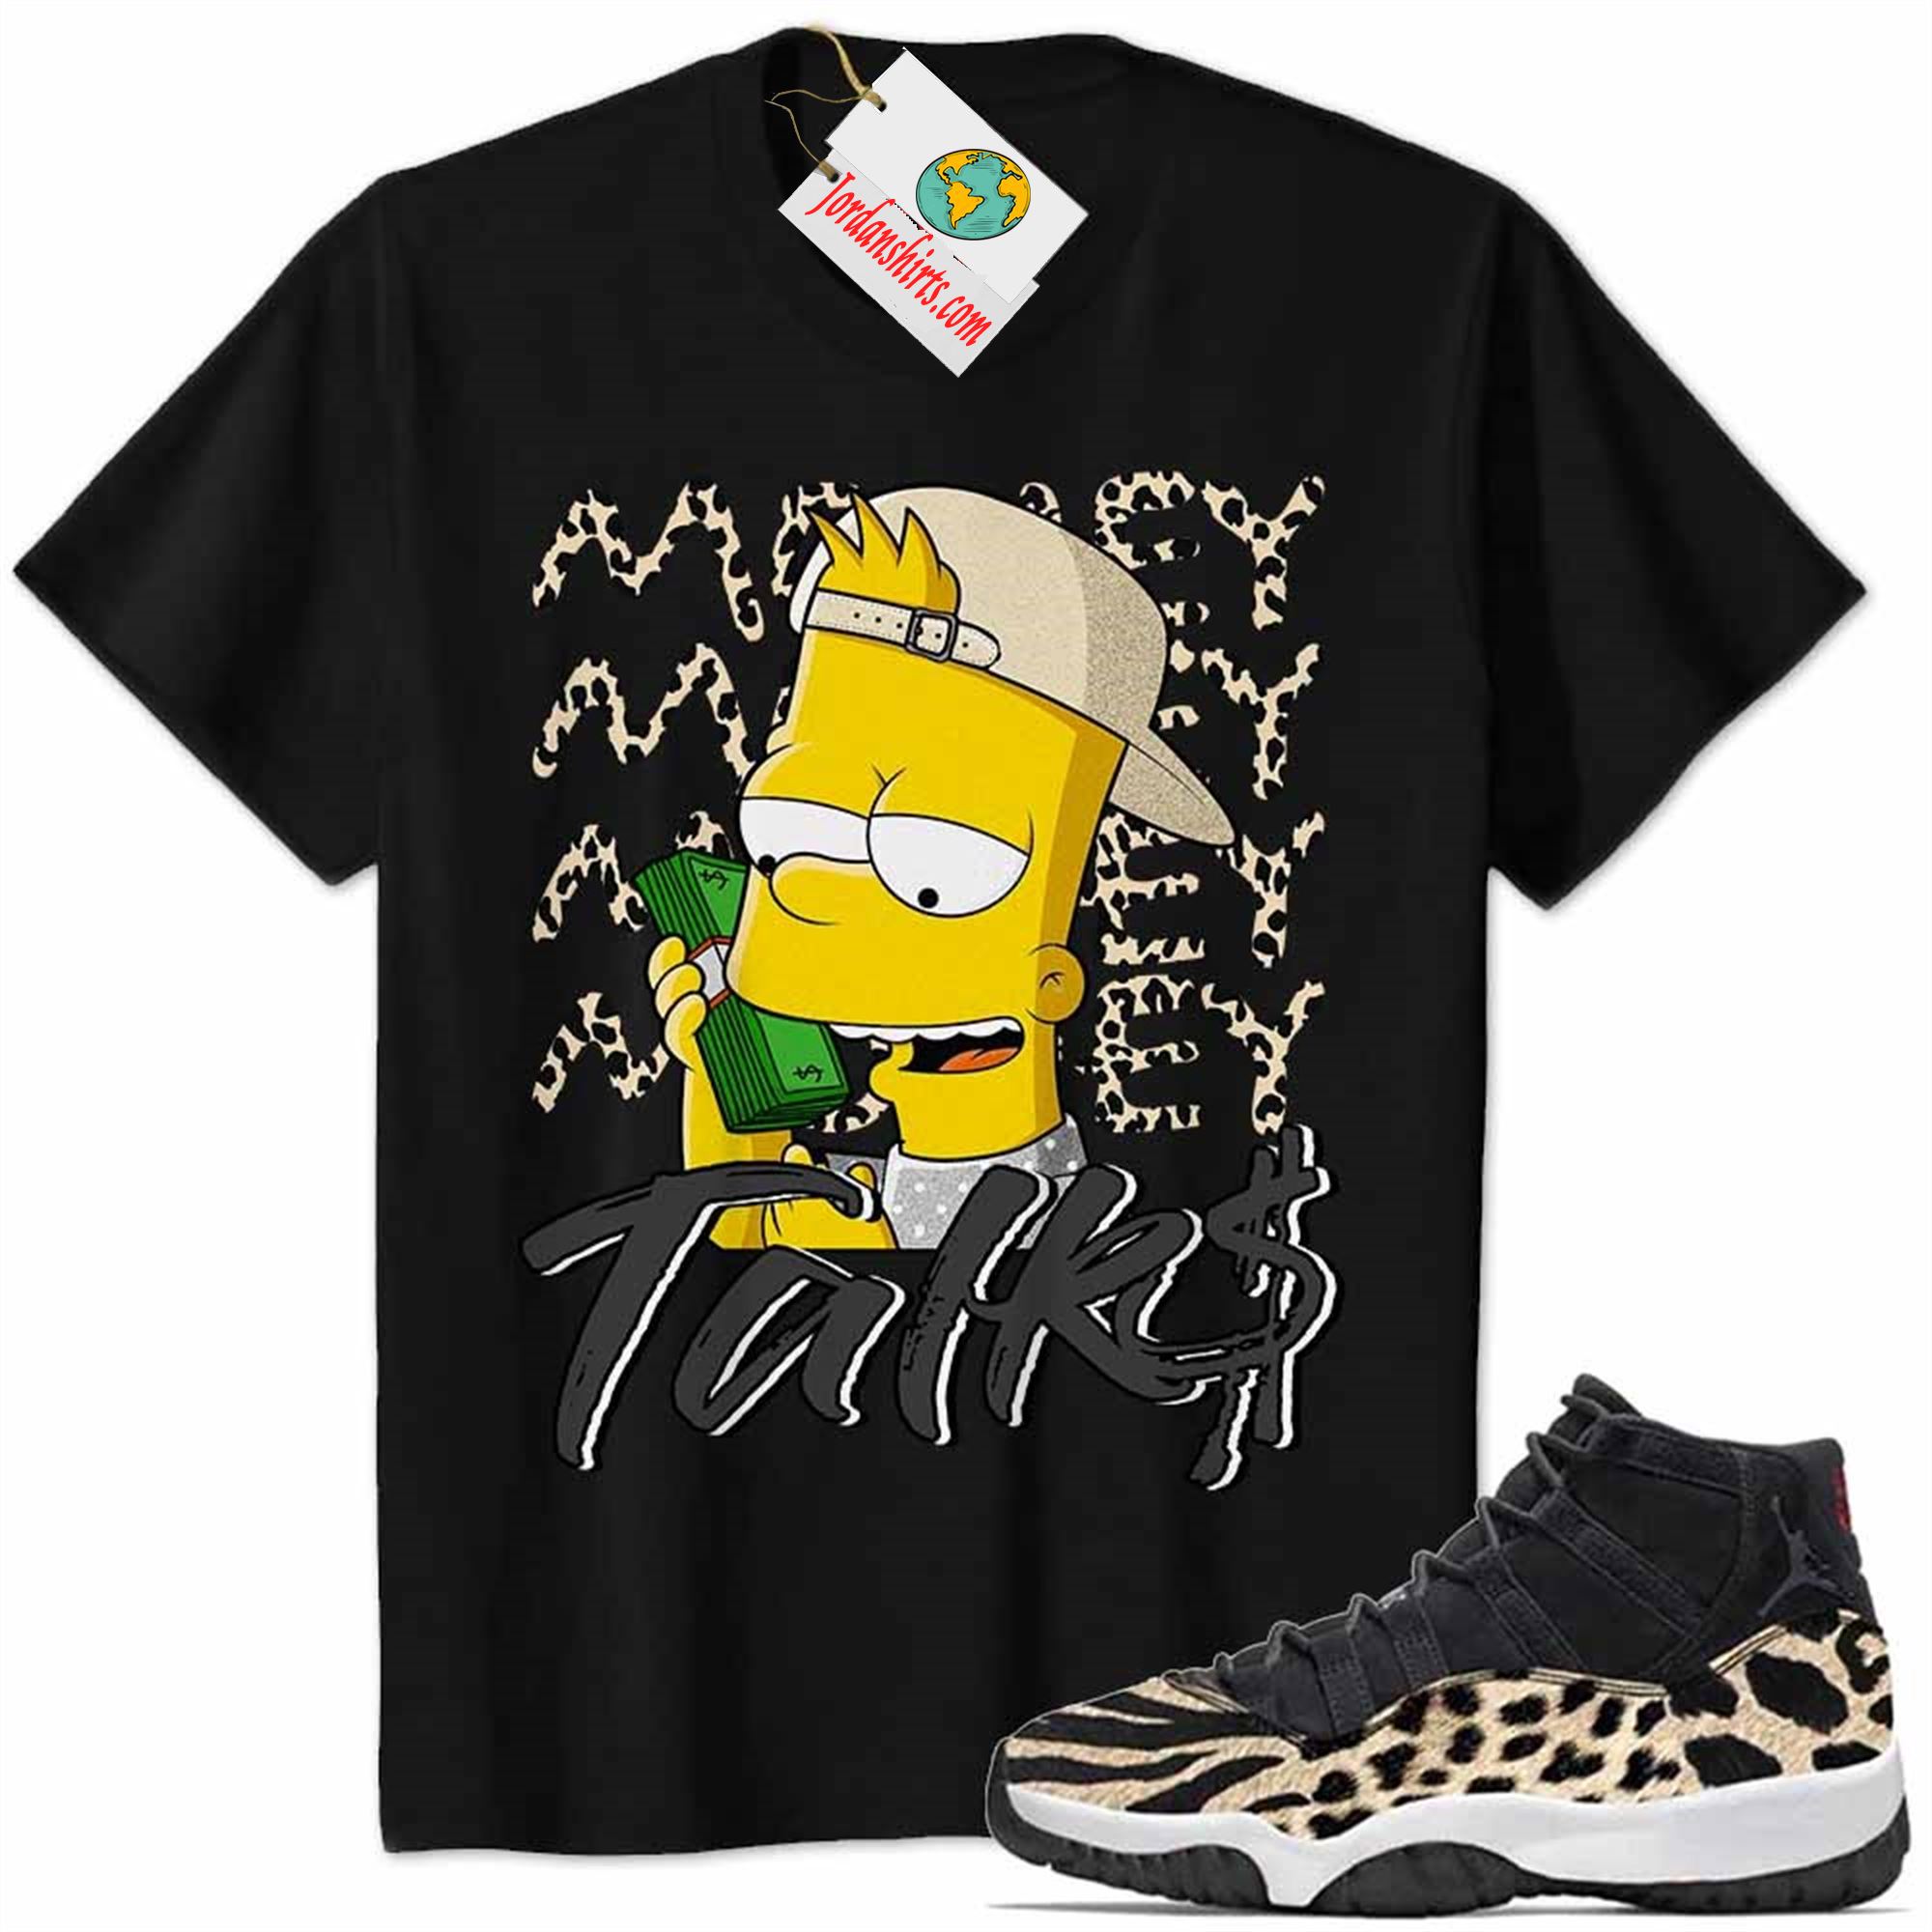 Jordan 11 Shirt, Jordan 11 Animal Print Shirt Money Talks Bart Simpson Rich Black Plus Size Up To 5xl